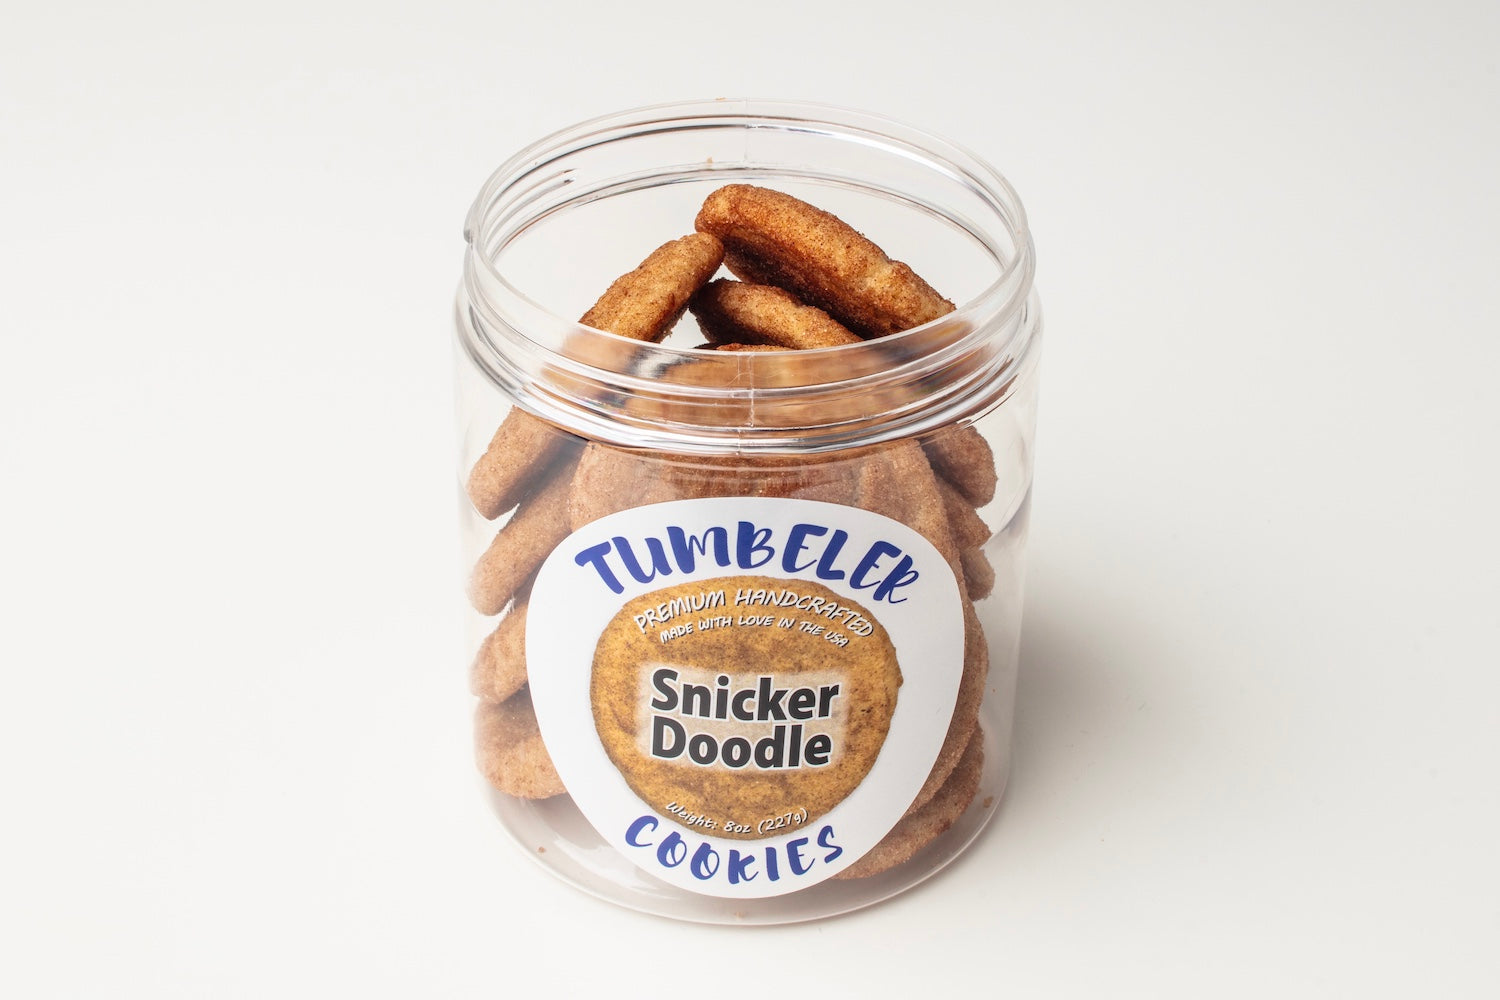 Snicker doodle — Tumbeler Cookie Coated with Cinnamon & Sugar